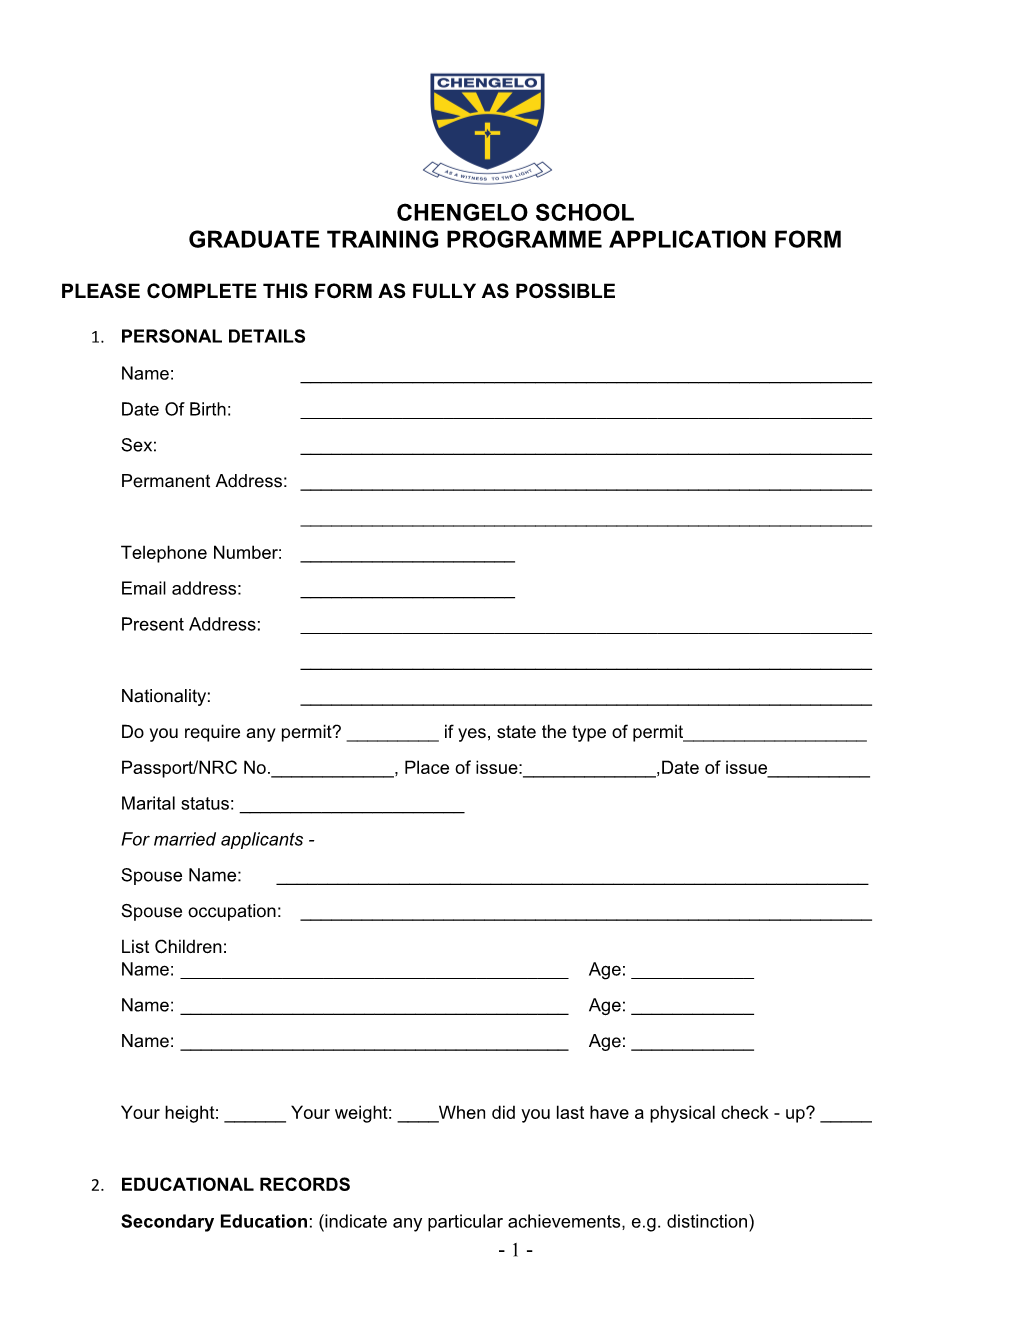 Graduate Training Programme Application Form